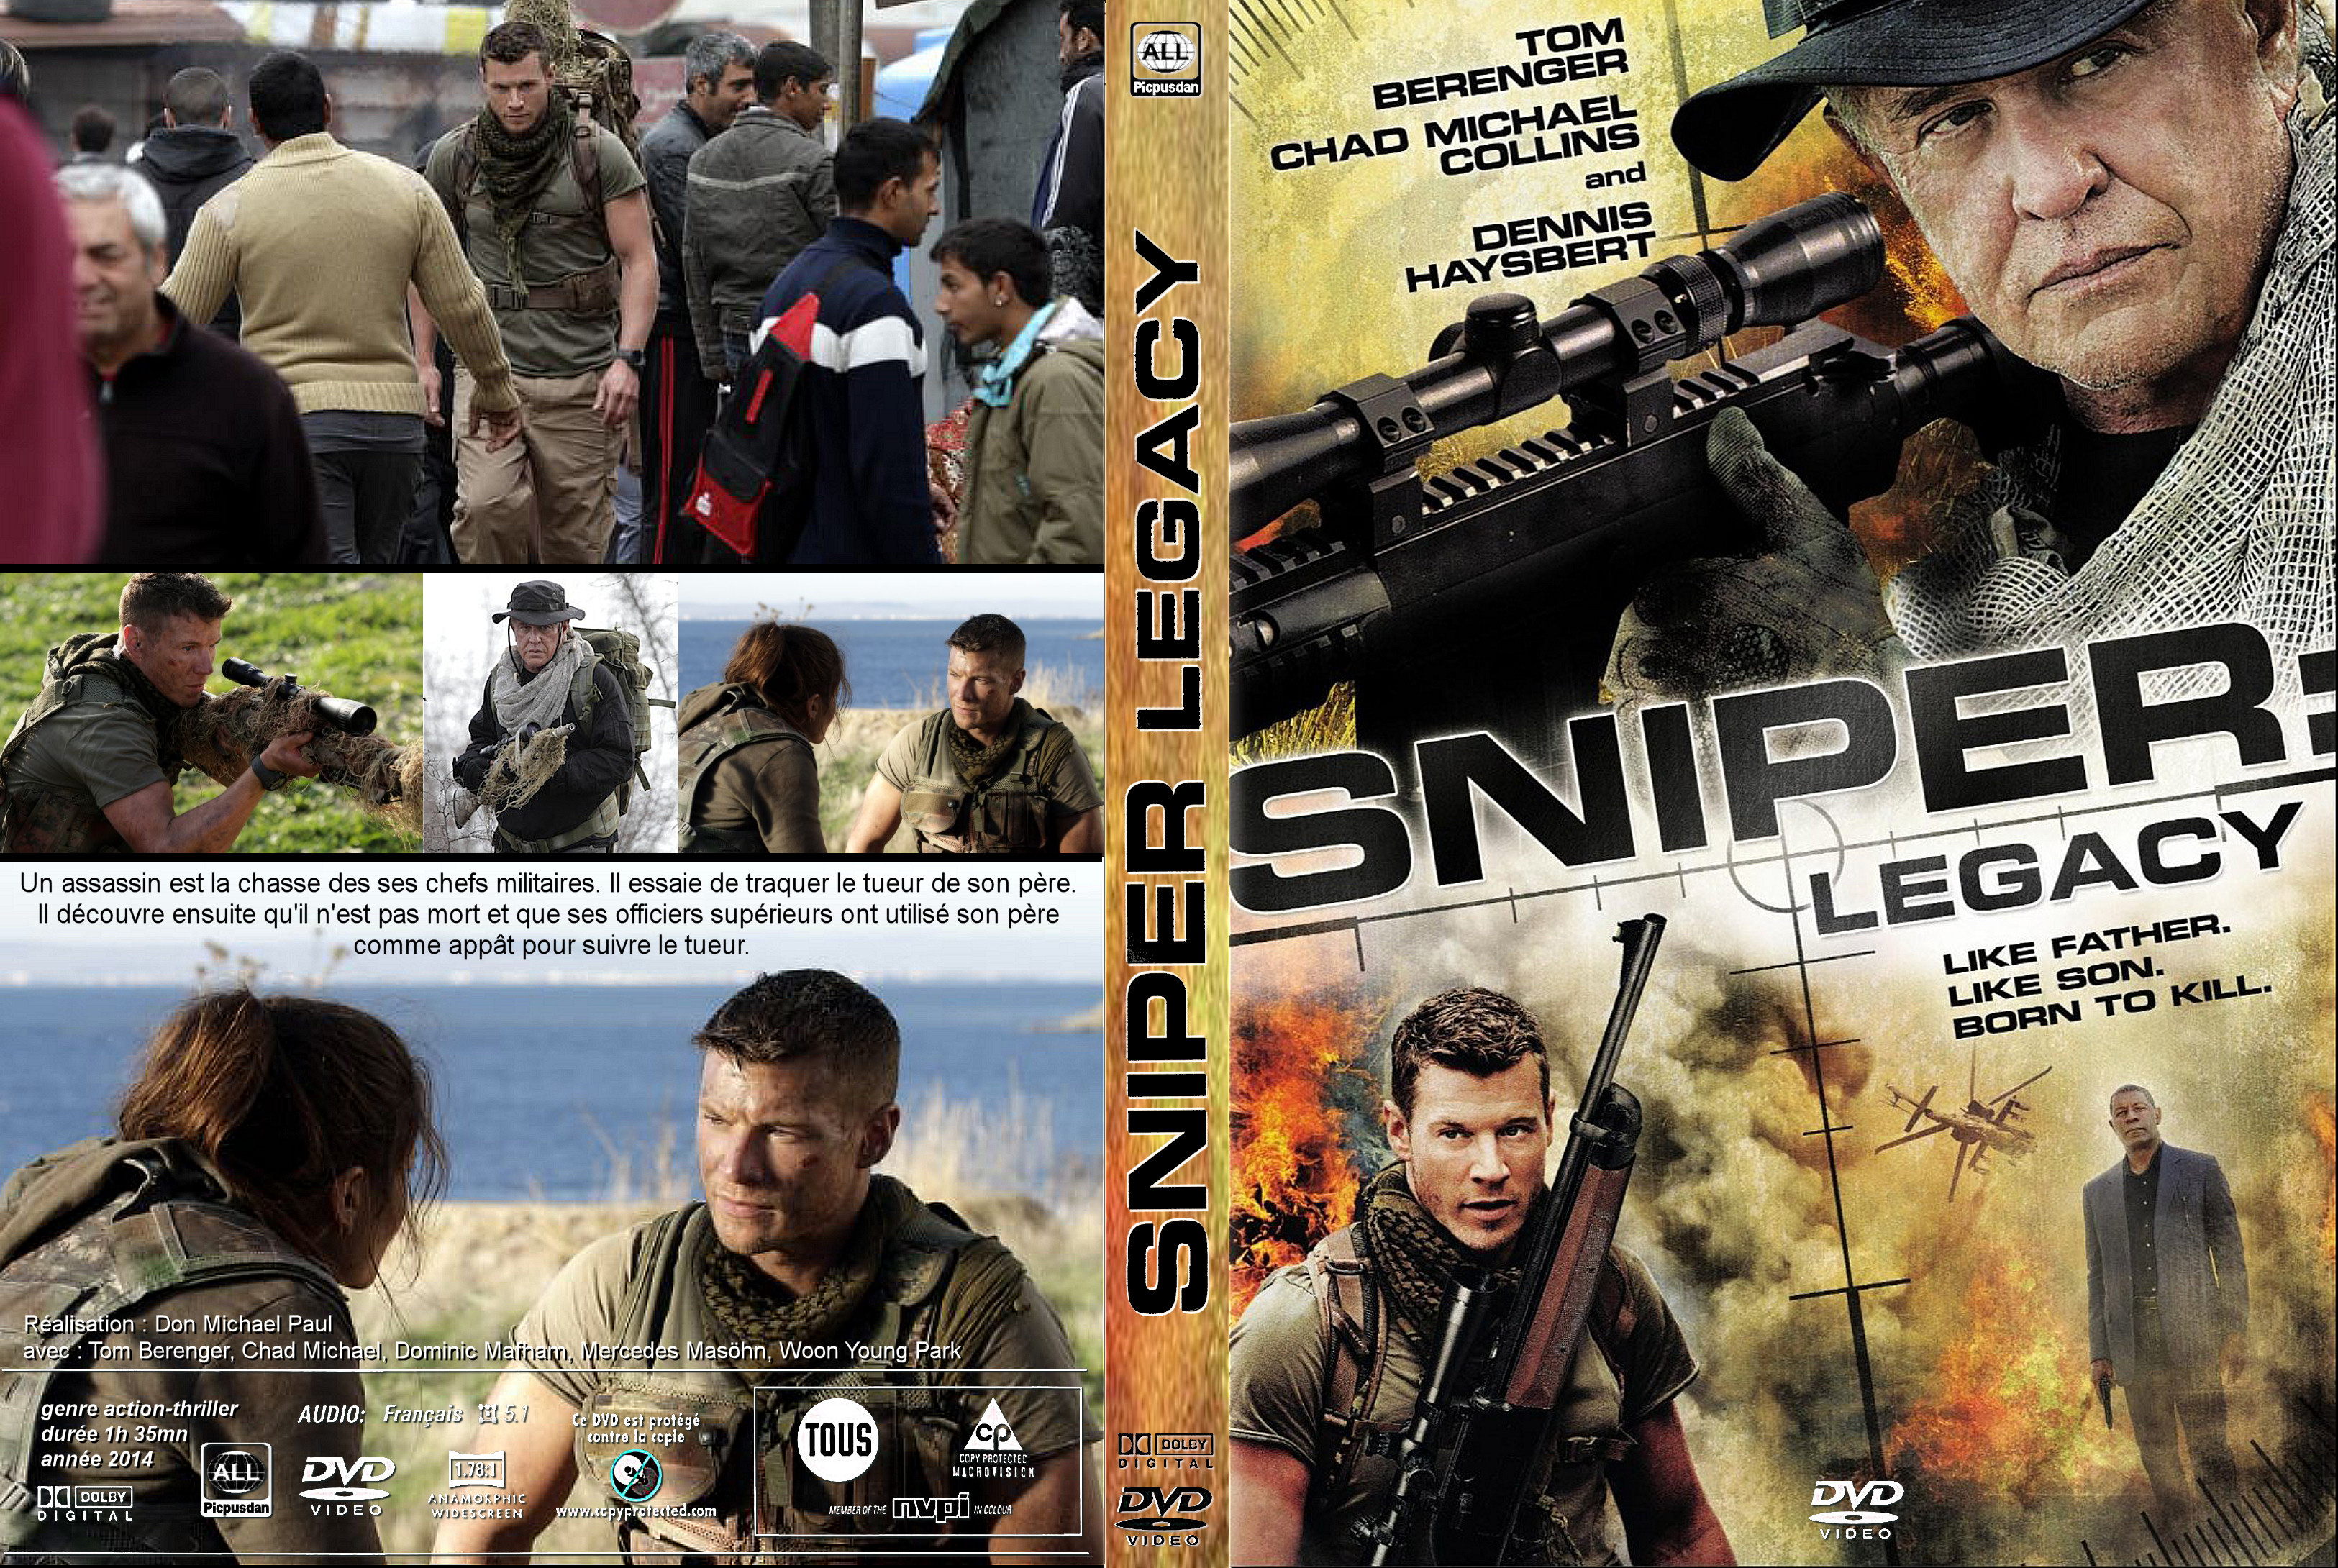 Jaquette DVD Sniper legacy custom